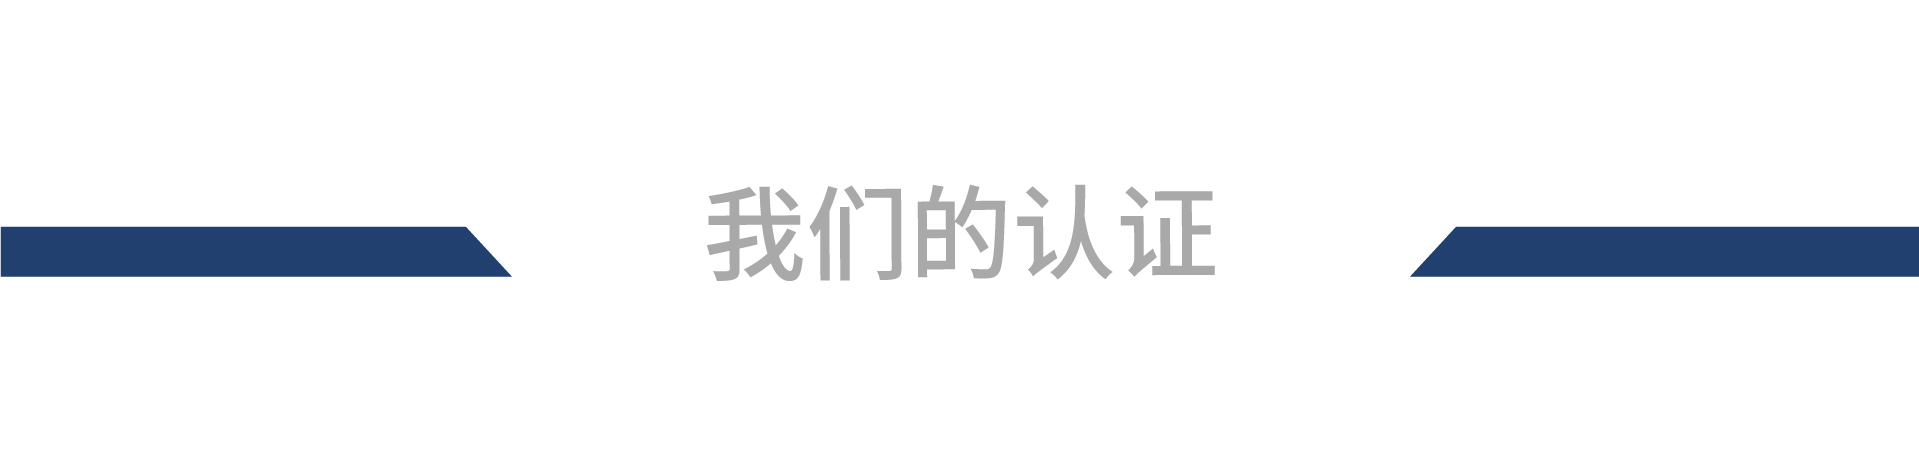 chengtian-our-certification_zh-cn_20201214.jpg